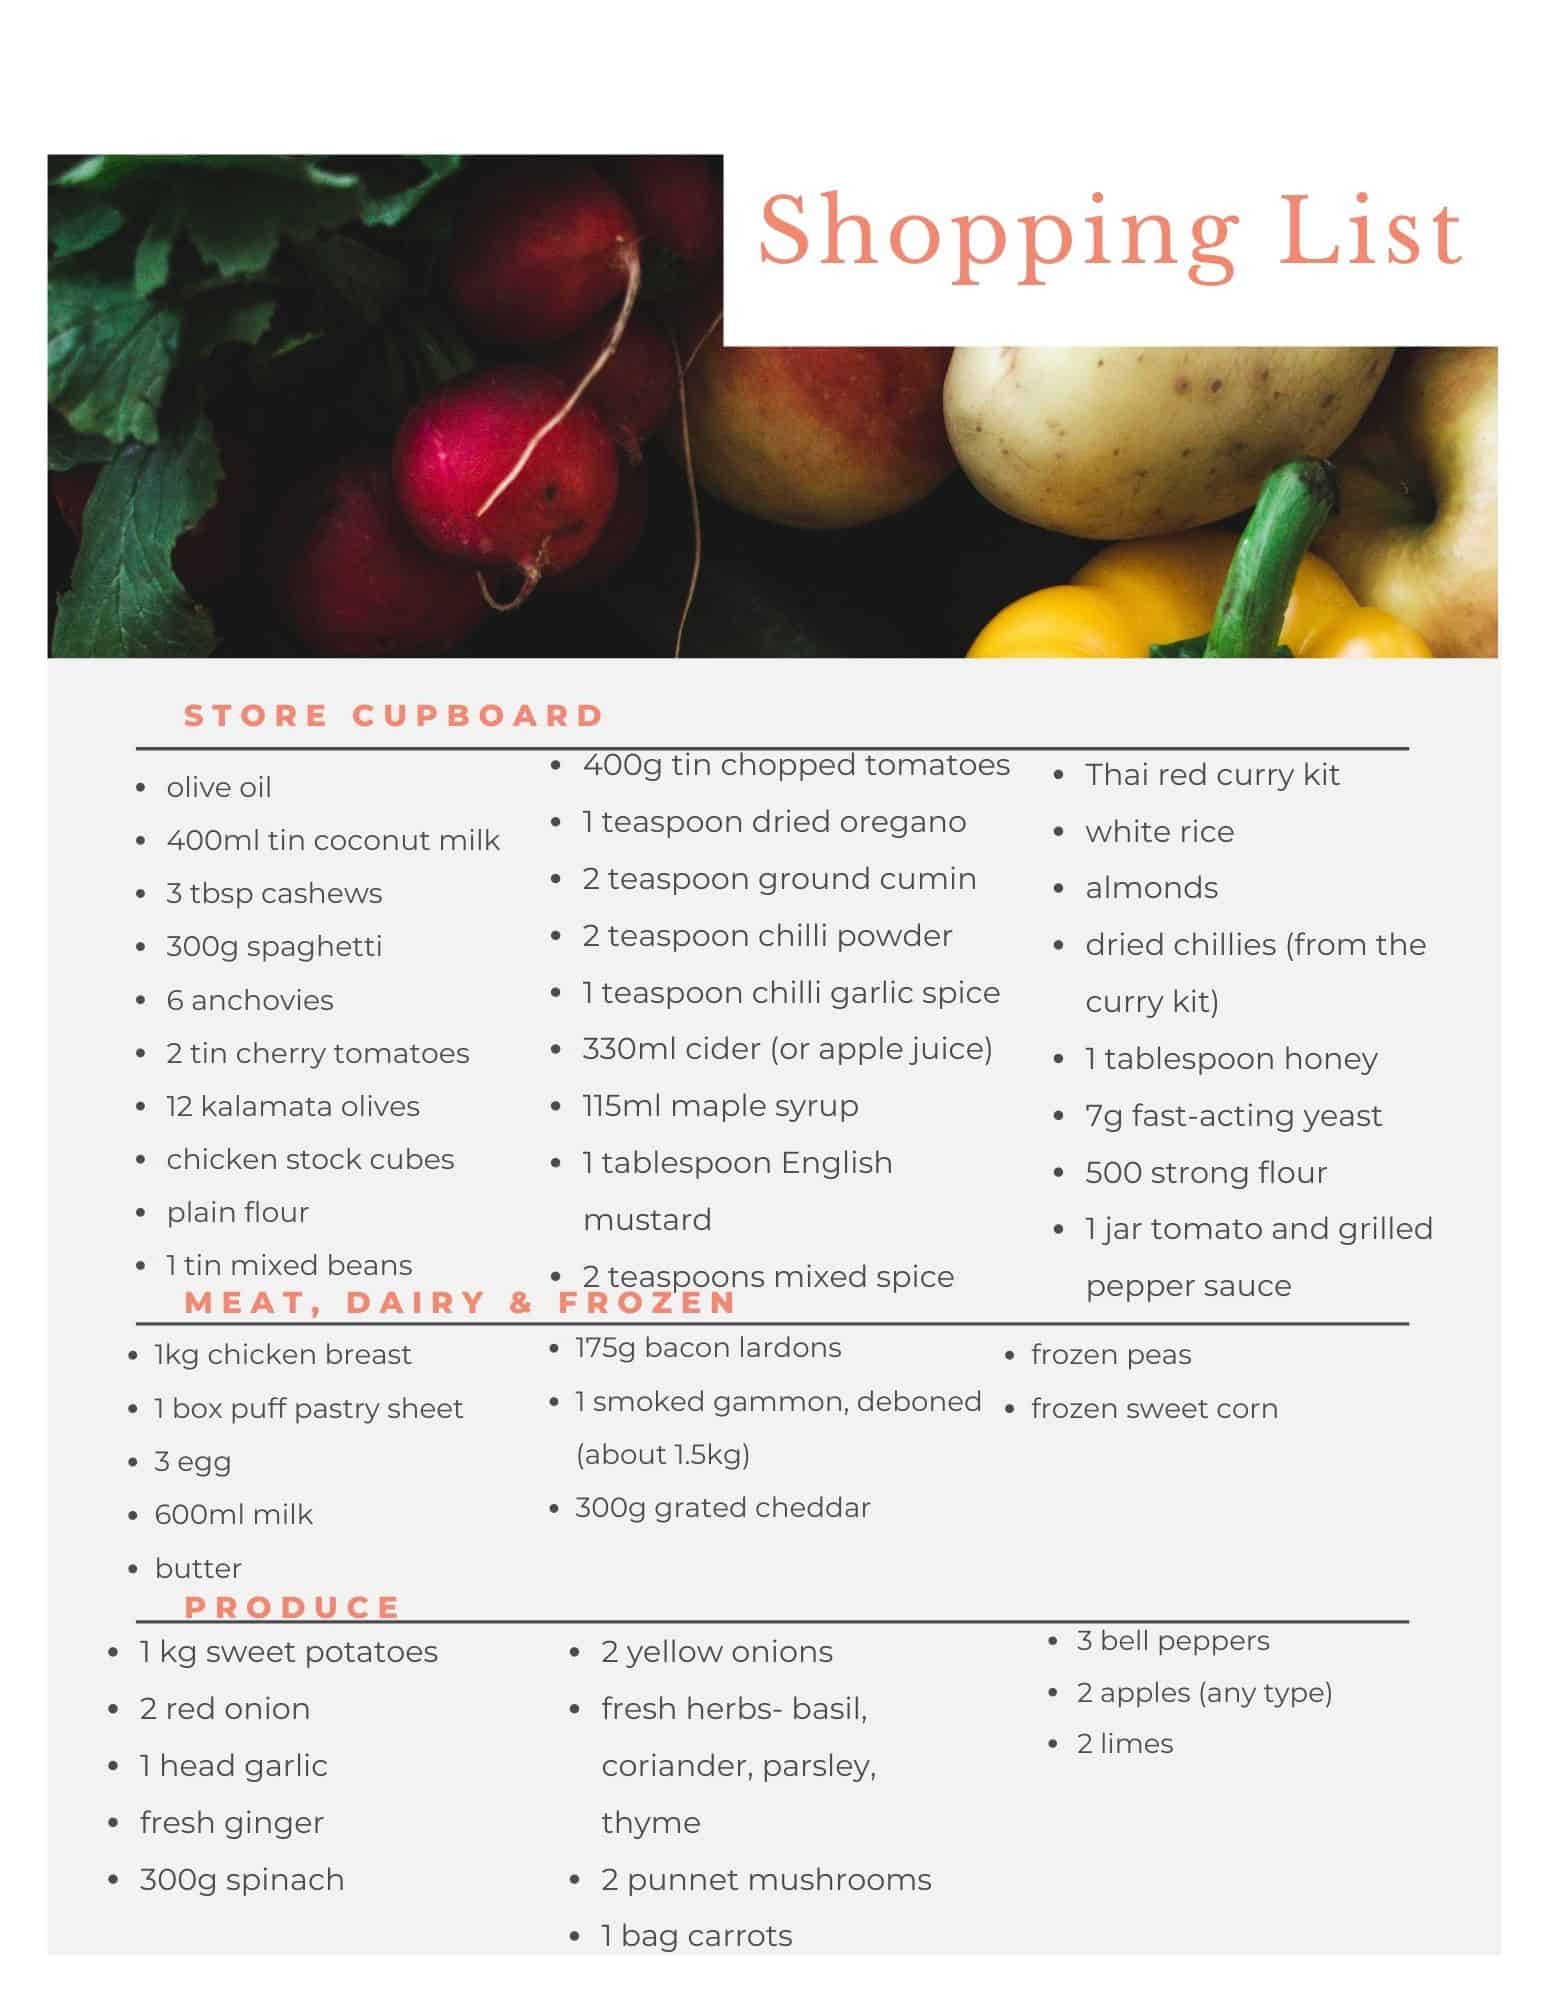 Aldi meal plan shopping list.